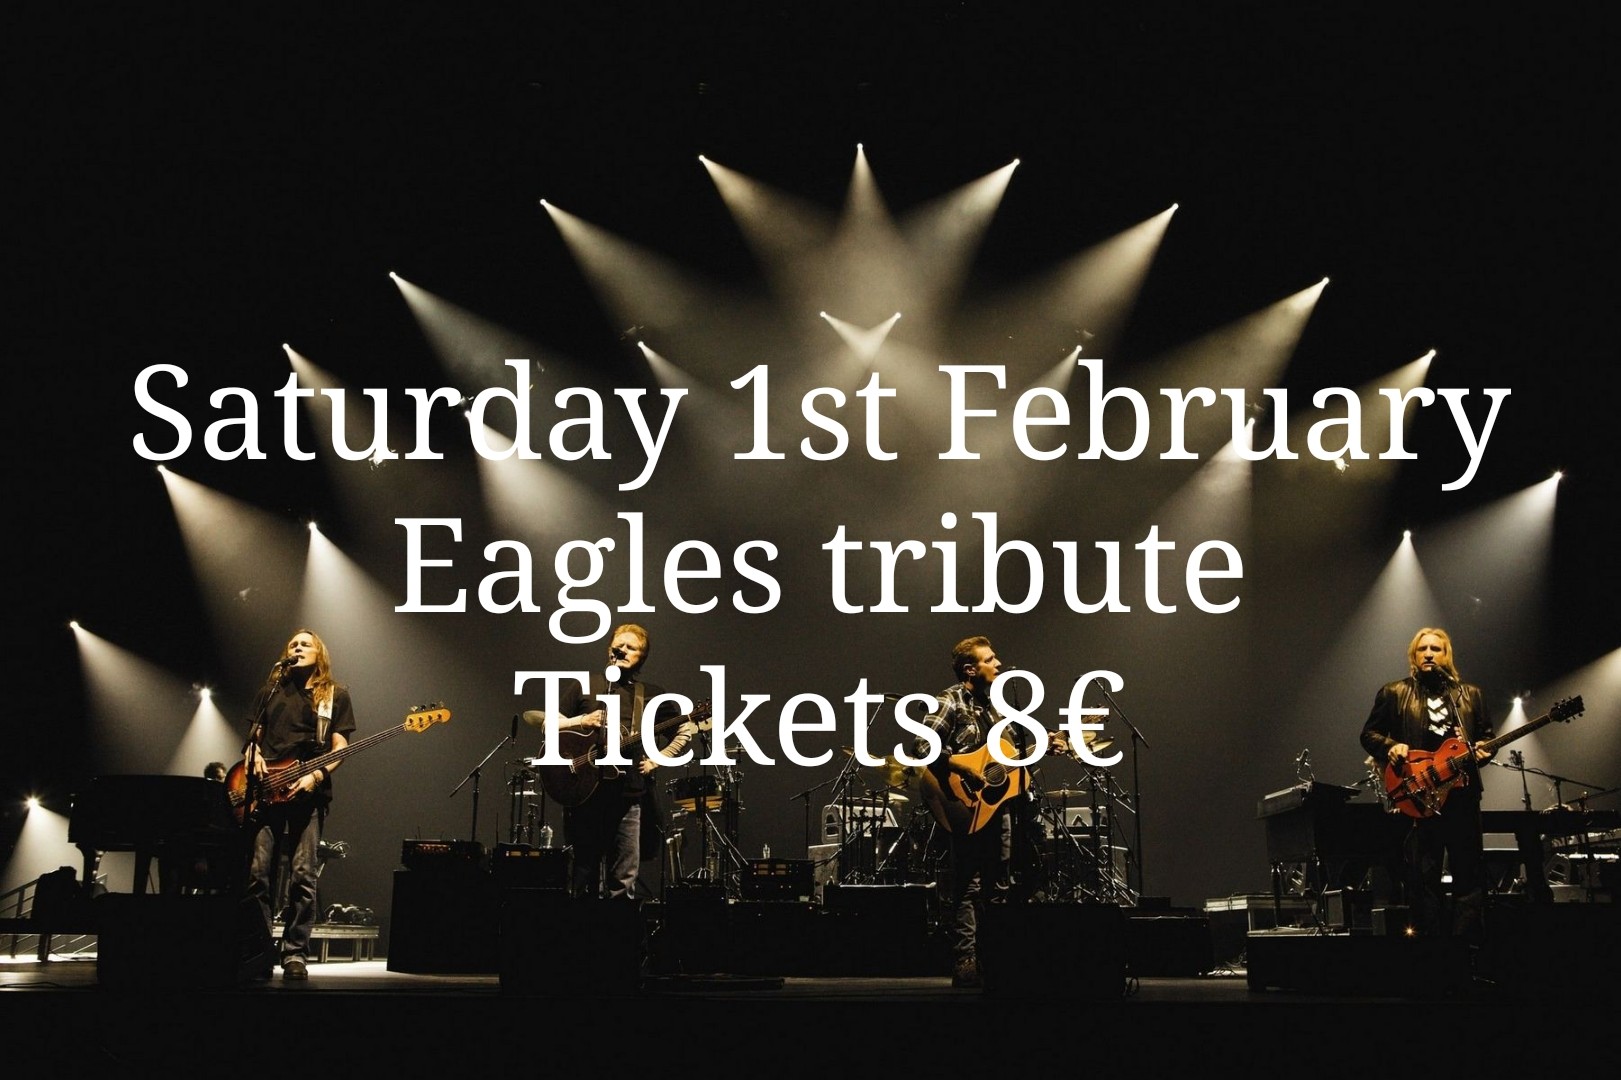 Eagles tribute